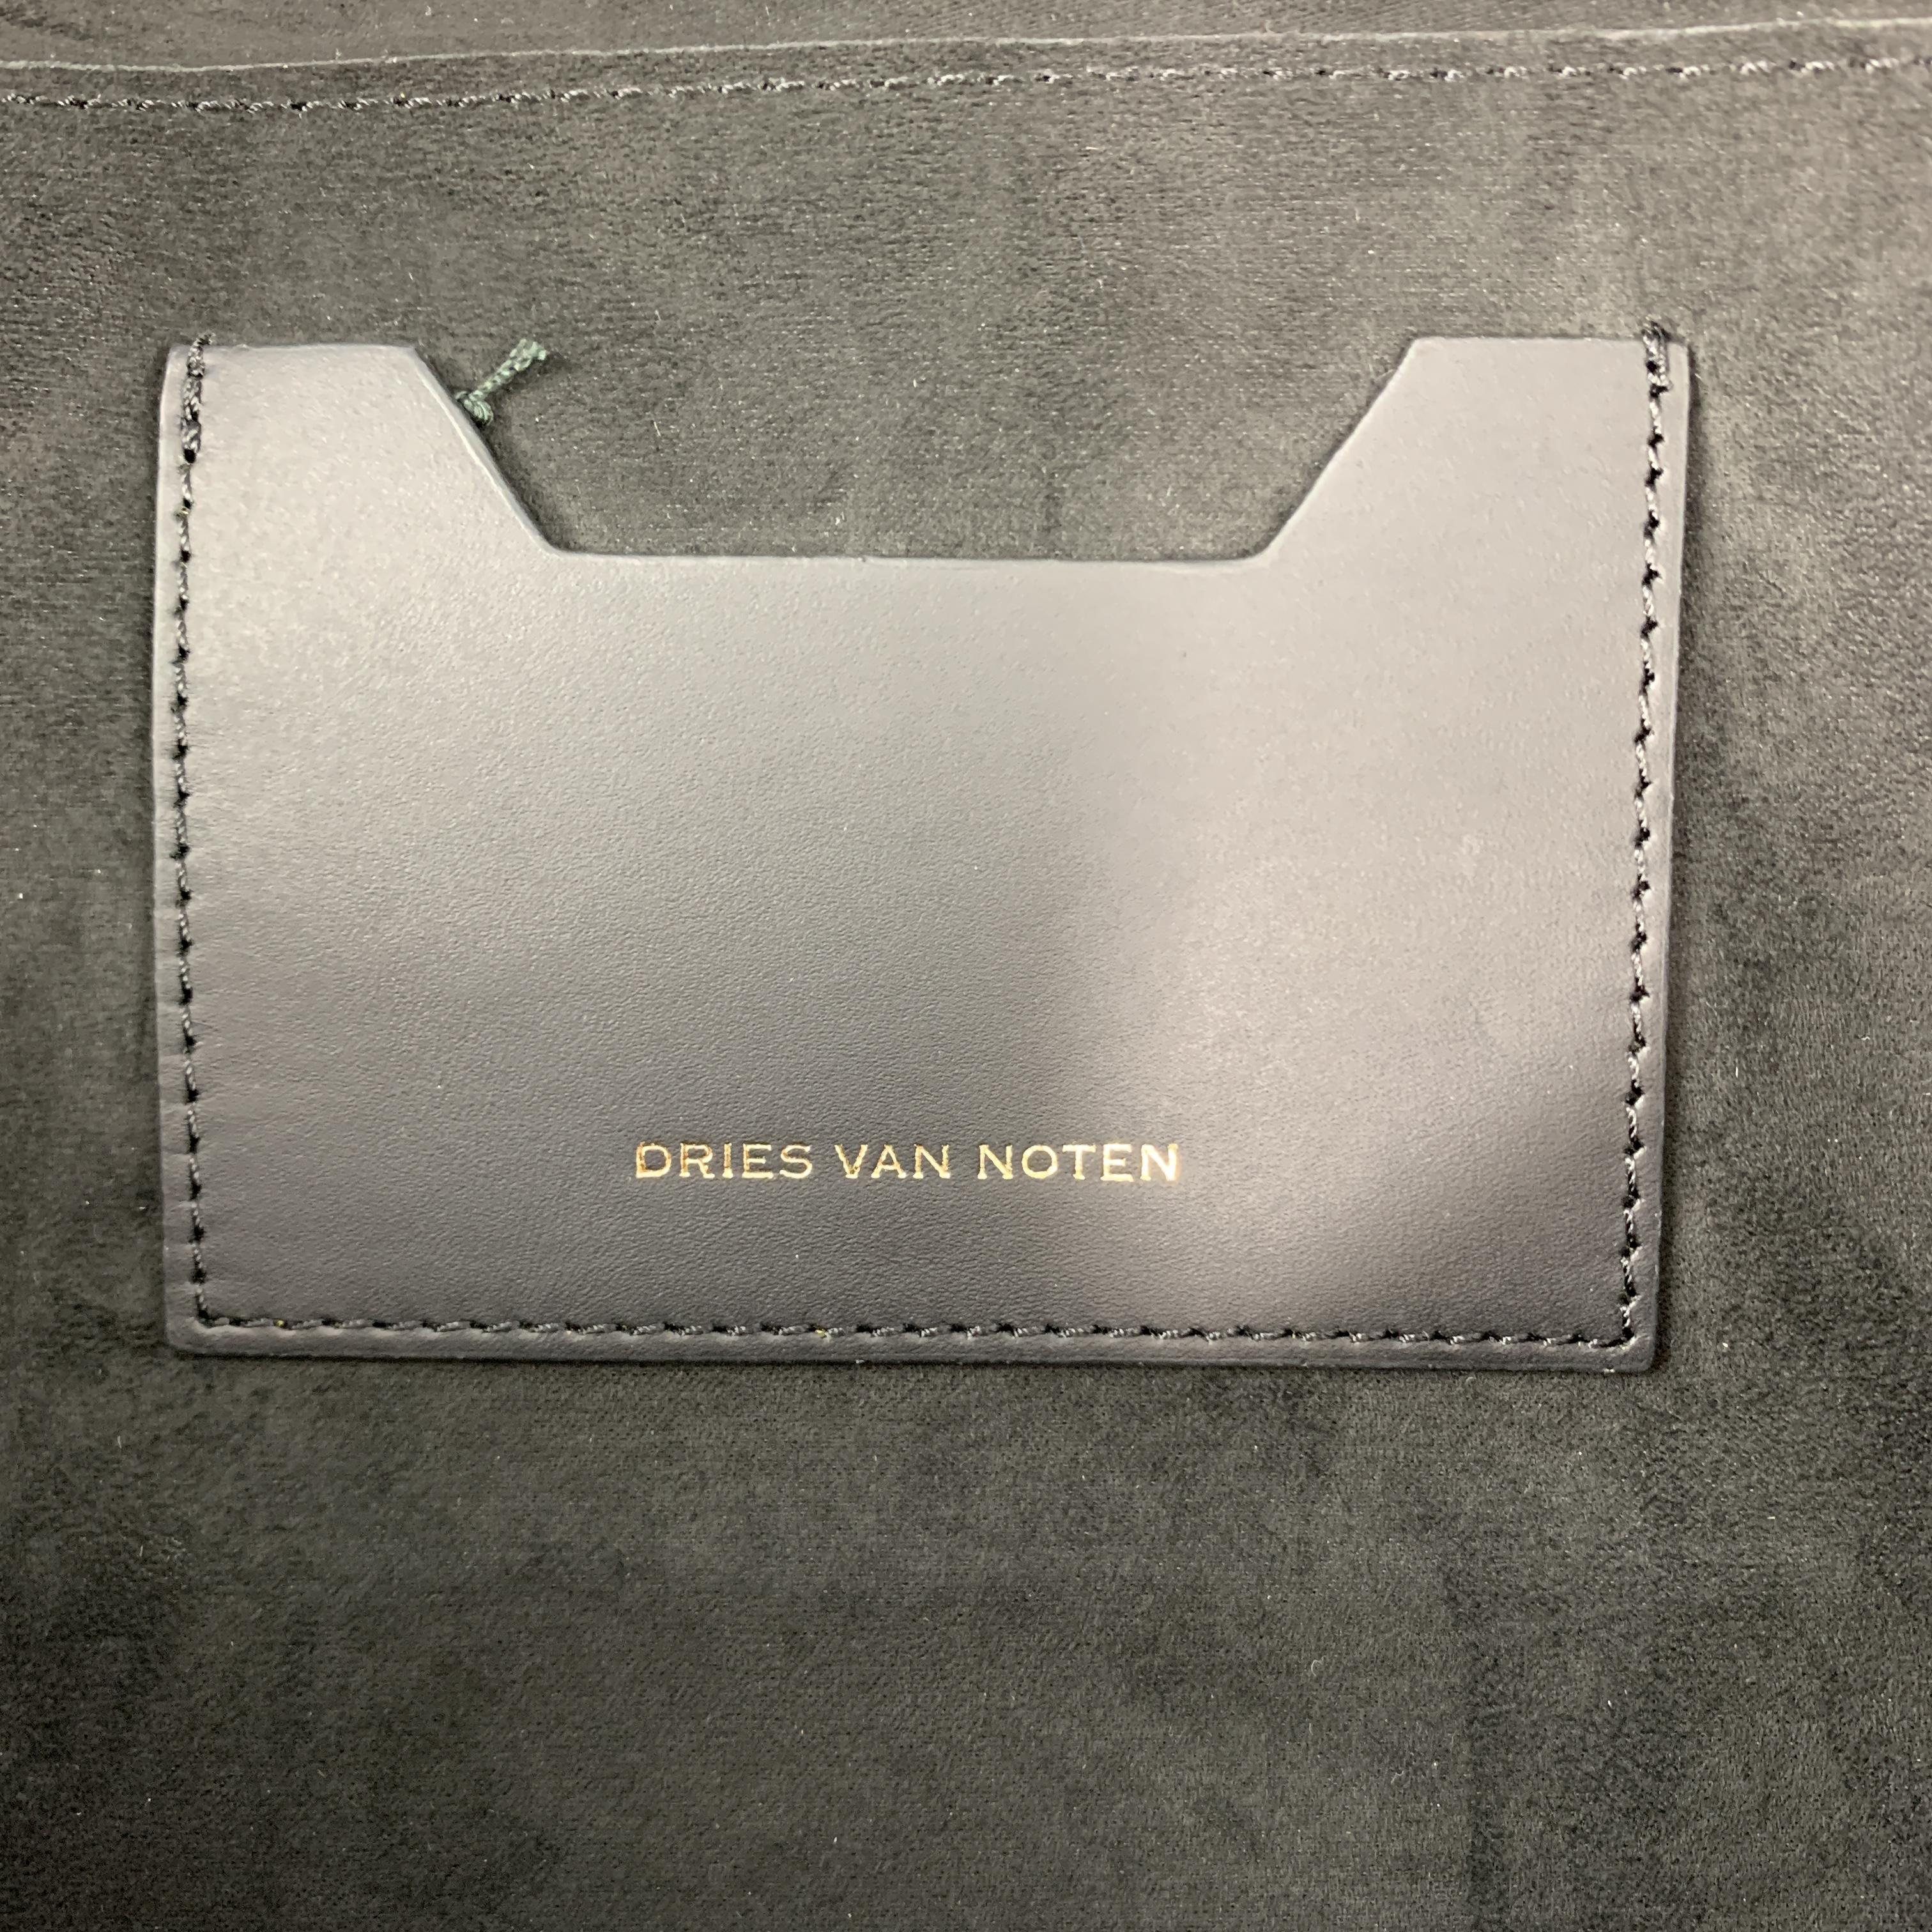 DRIES VAN NOTEN Black Crocodile Embossed Patent Leather Clutch Bag 2